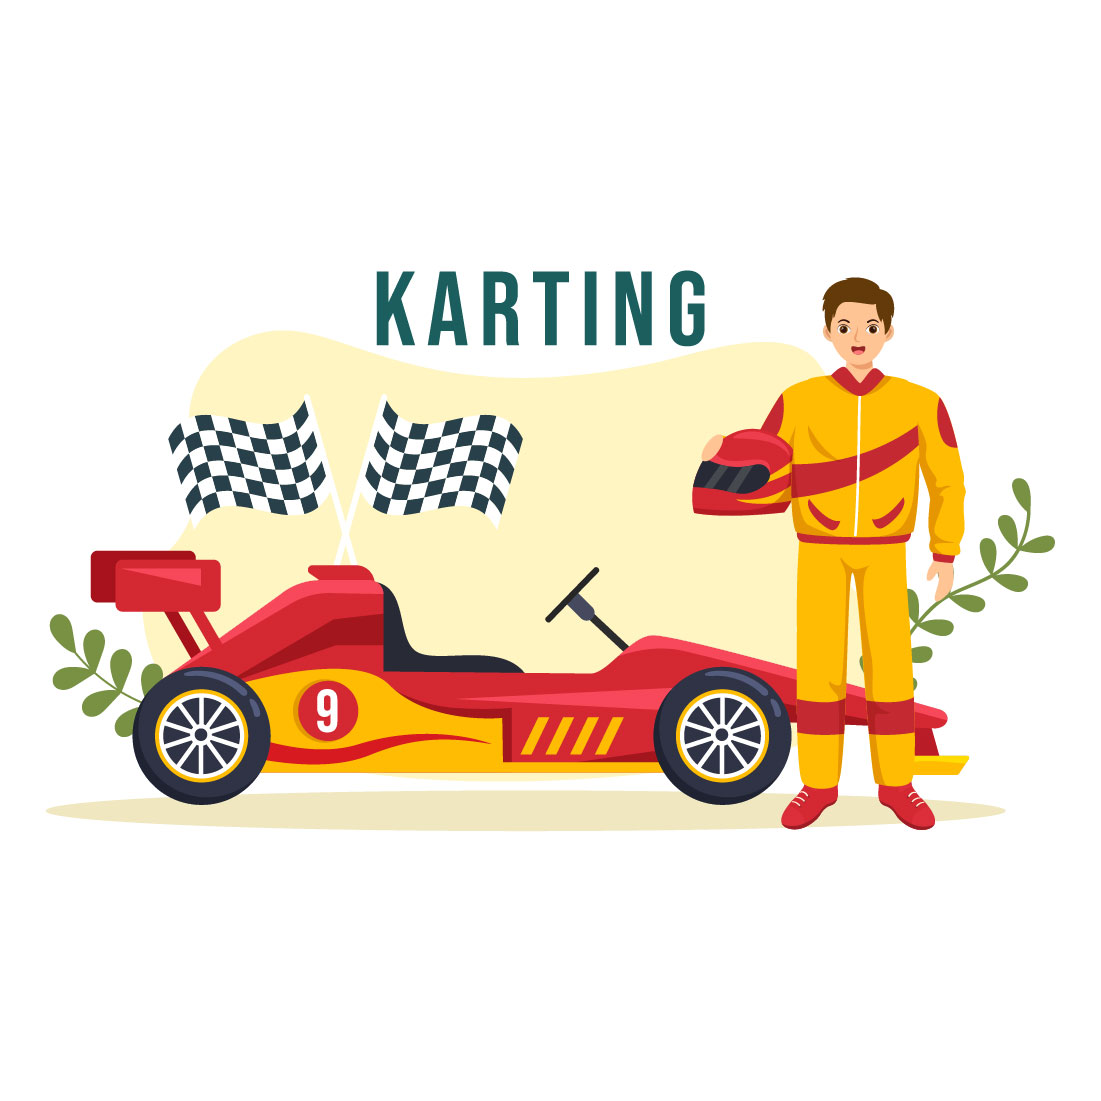 Karting Sport Illustration main cover image.